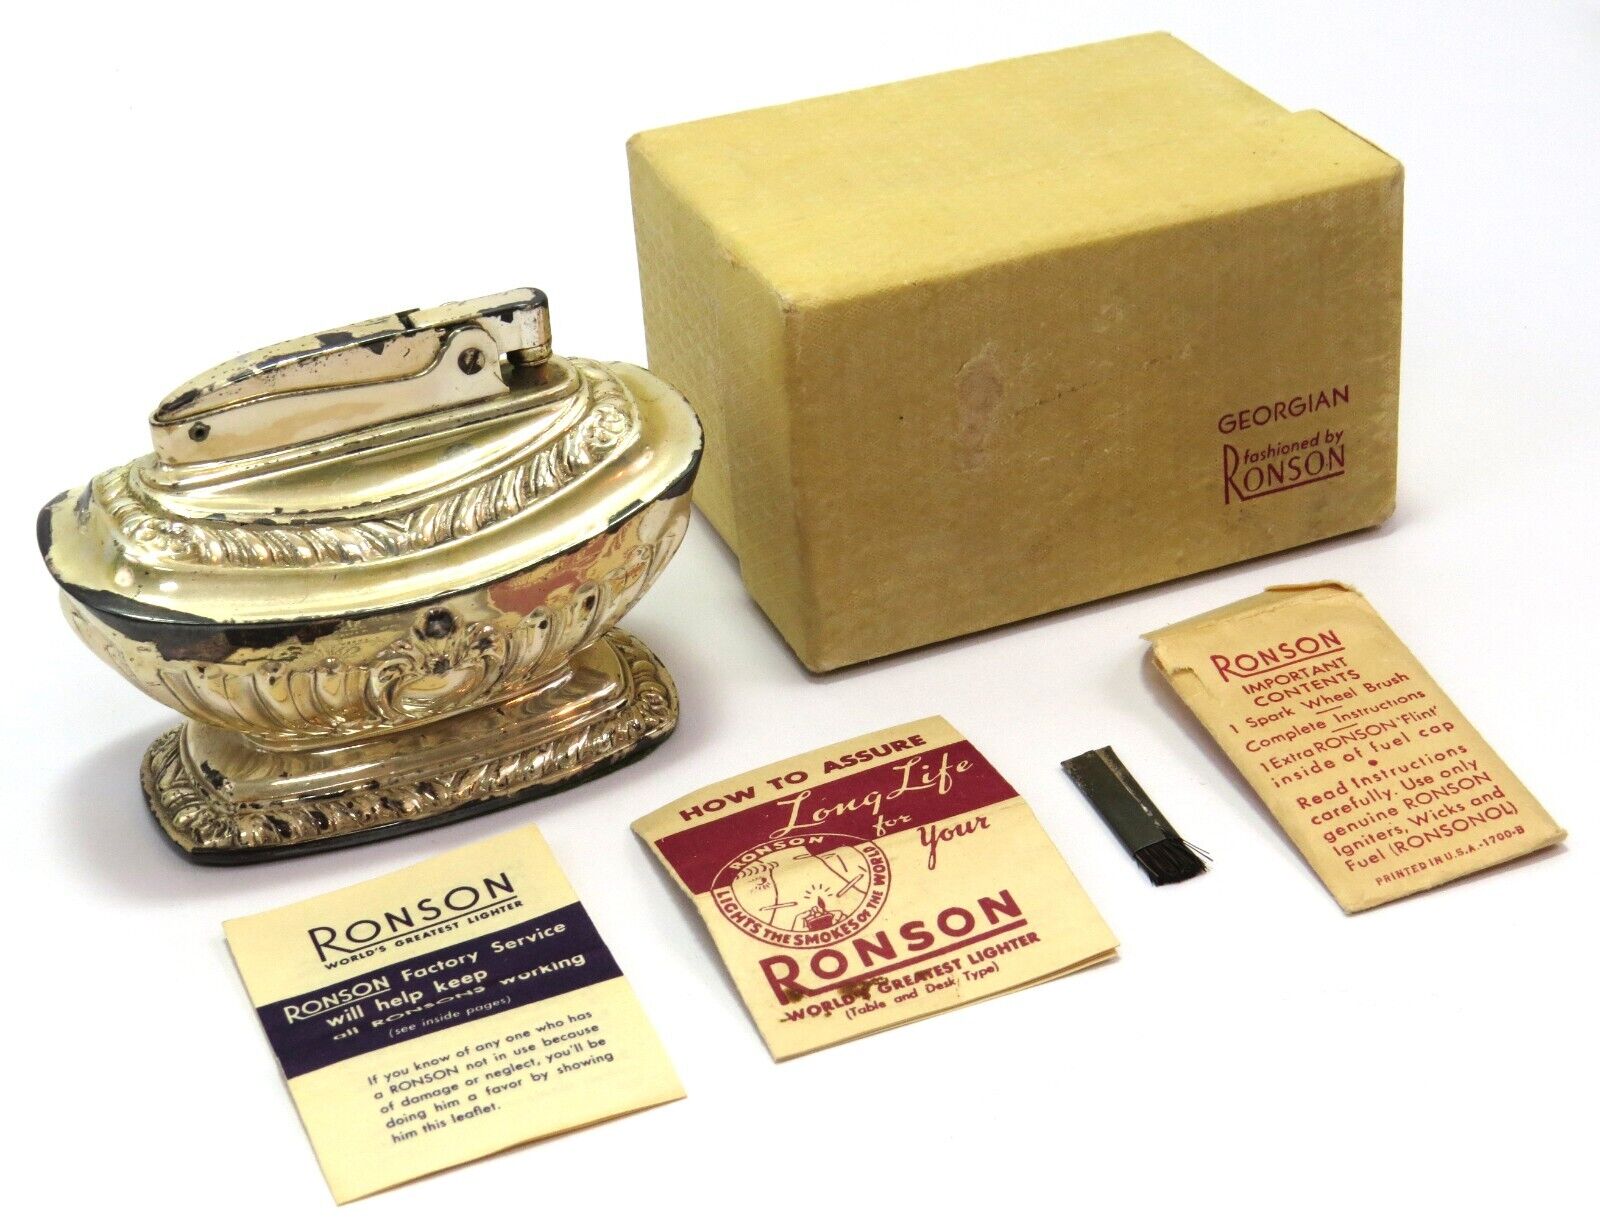 Ronson Georgian Silverplate Vintage Tabletop Cigarette Lighter, Box, Inserts